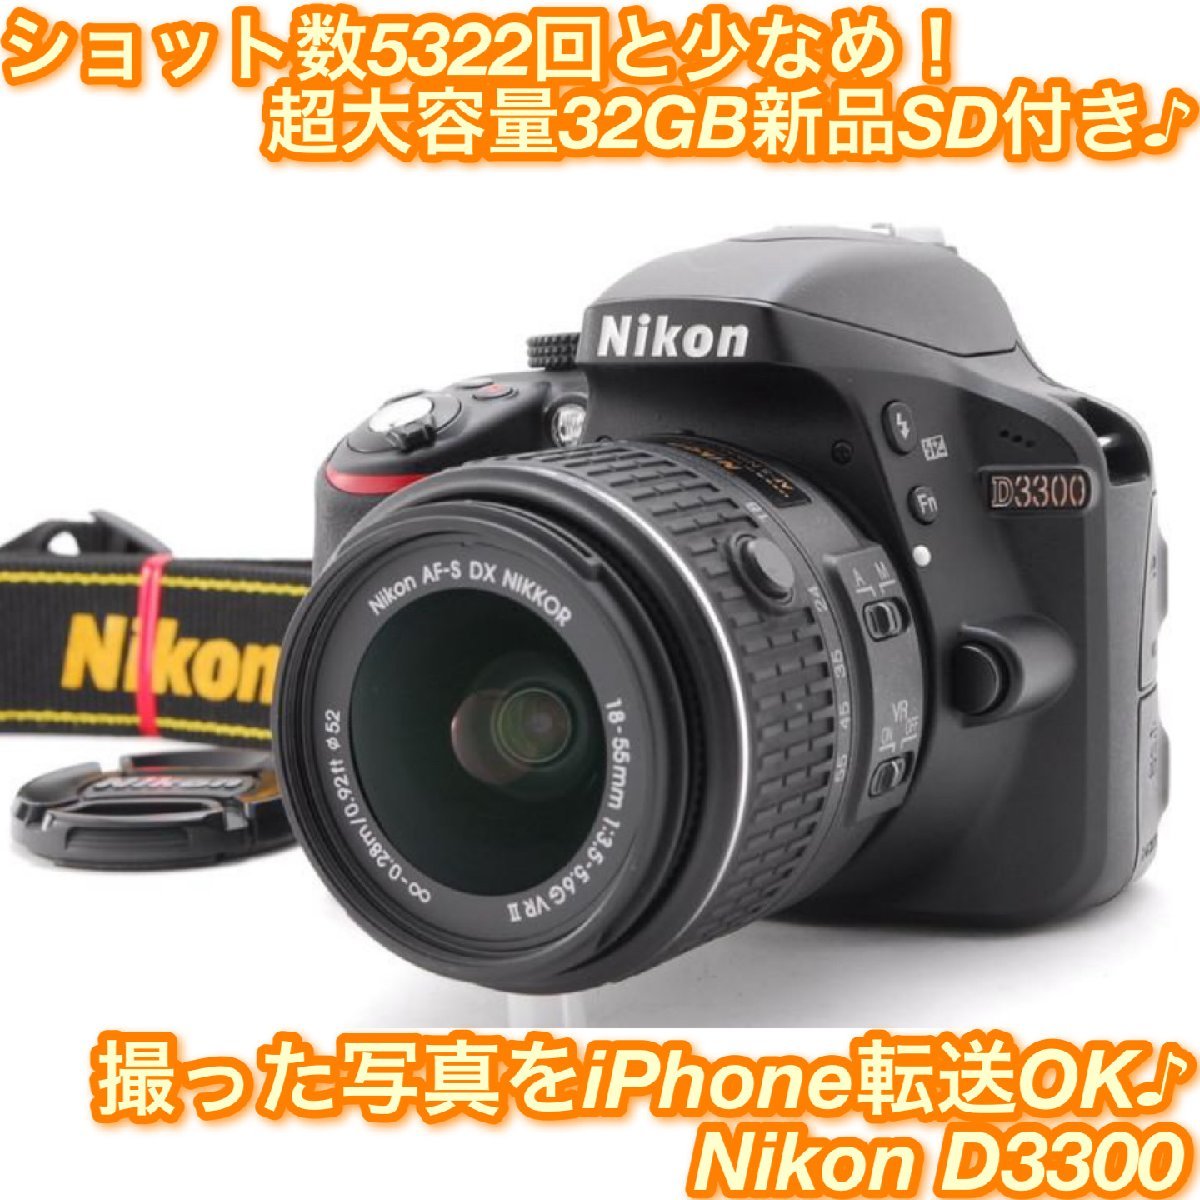 Nikon ニコン D3300 レンズキット 新品SD32GB付き iPhone転送 diprodi.net